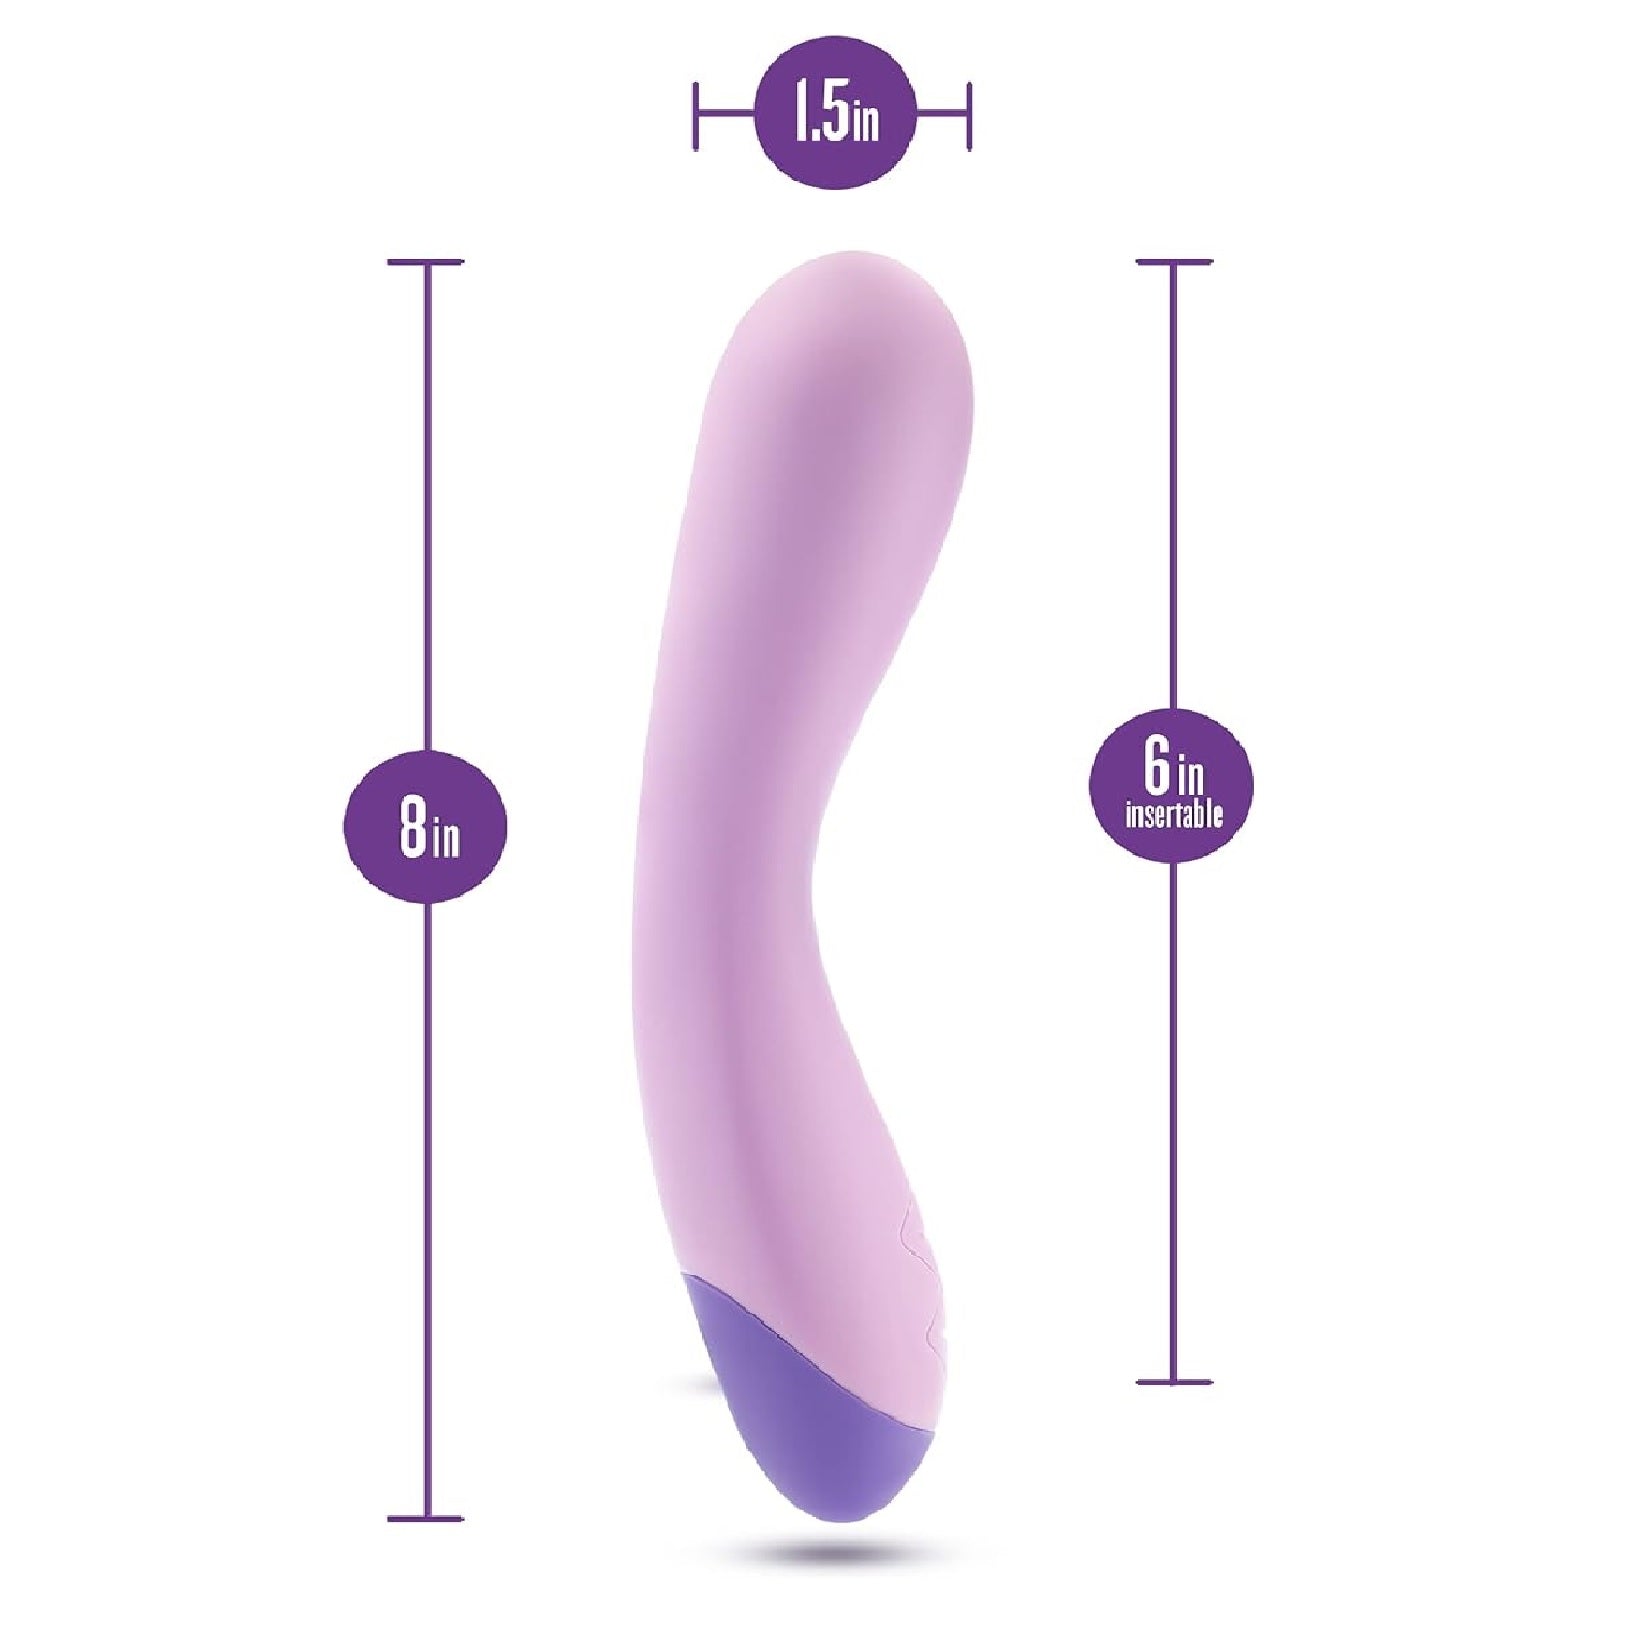 Blush Wellness G Curve G-Spot Vibrator - Purple